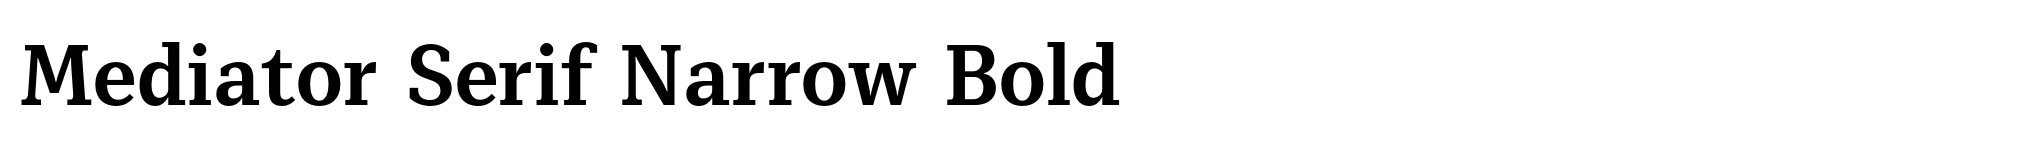 Mediator Serif Narrow Bold image